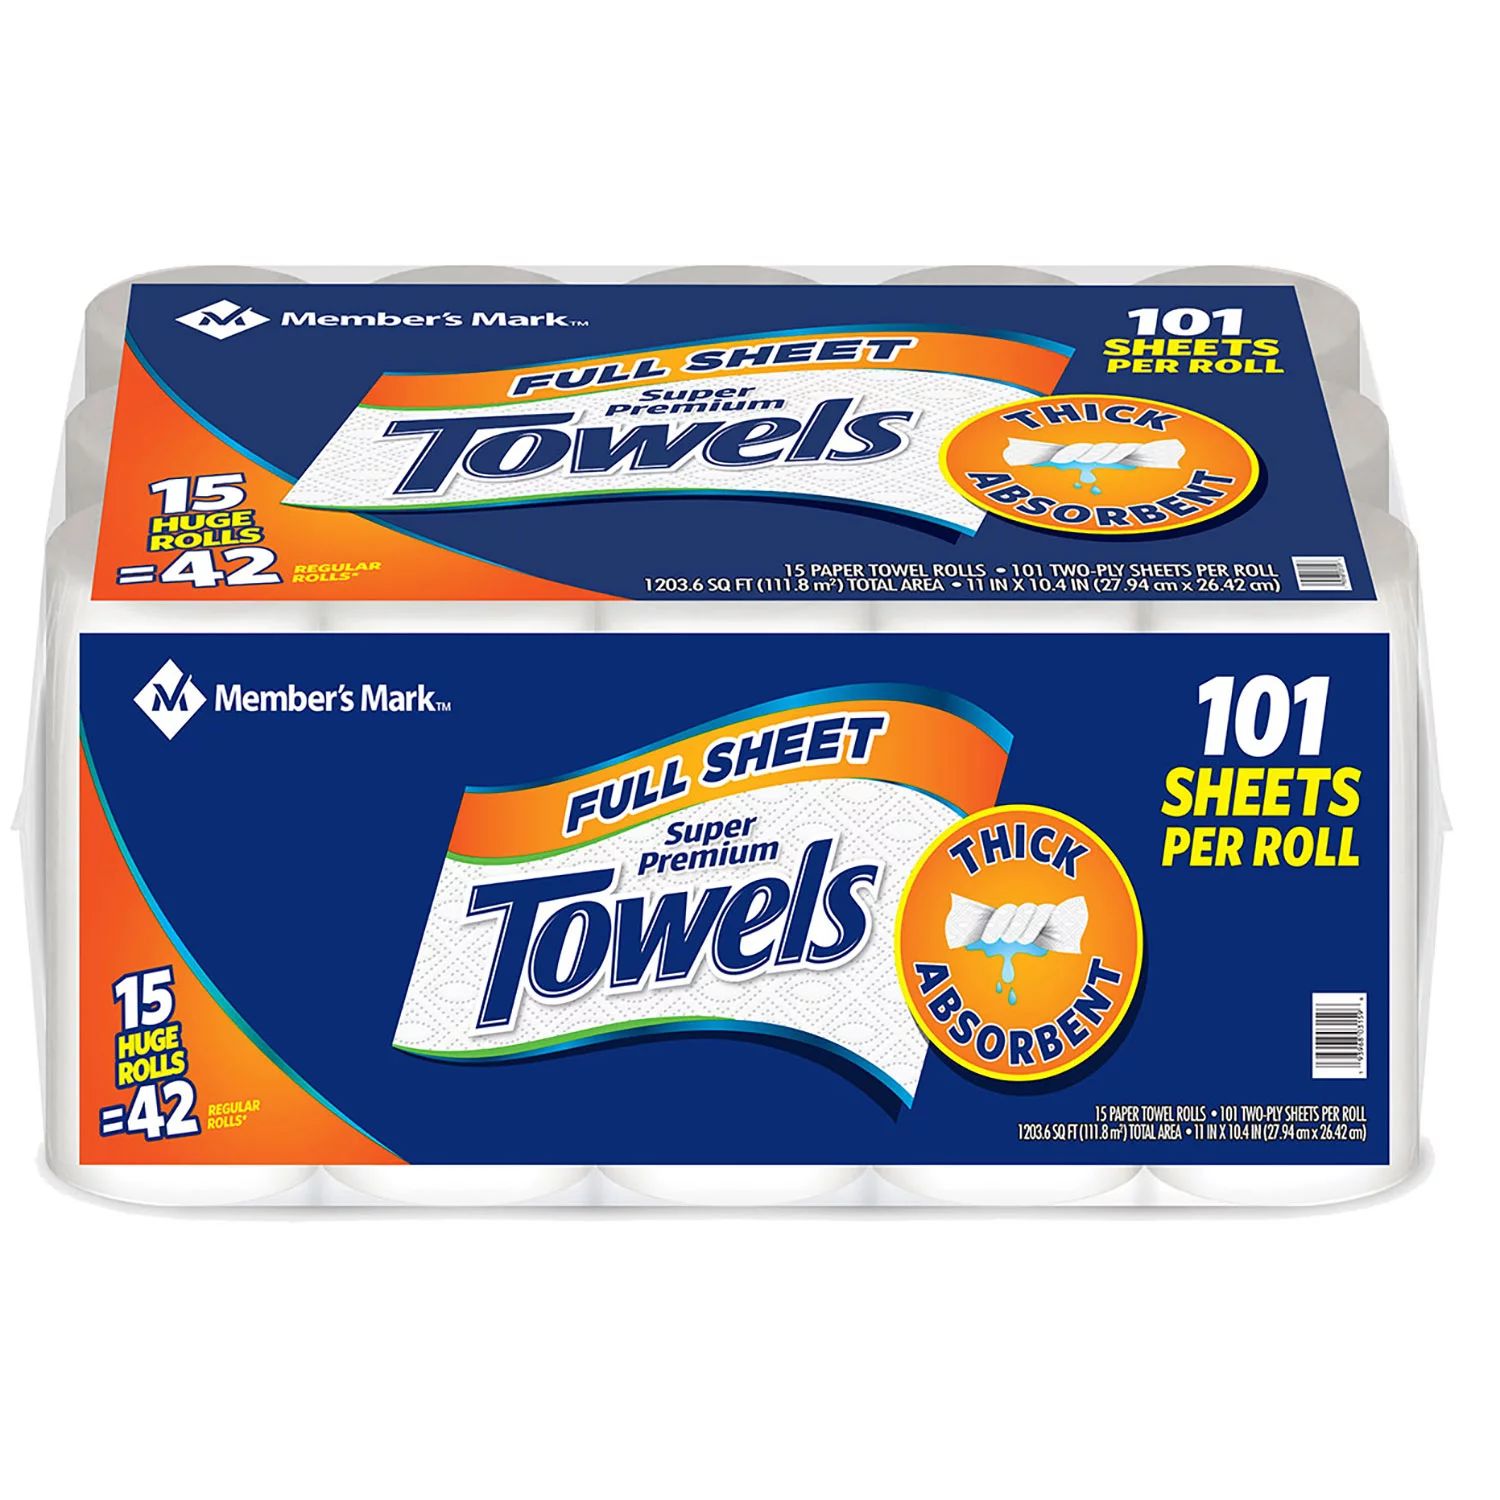 Member's Mark Premium Full Sheet 2-Ply Paper Towels, Huge Rolls (101 sheets/roll, 15 rolls) | Sam's Club